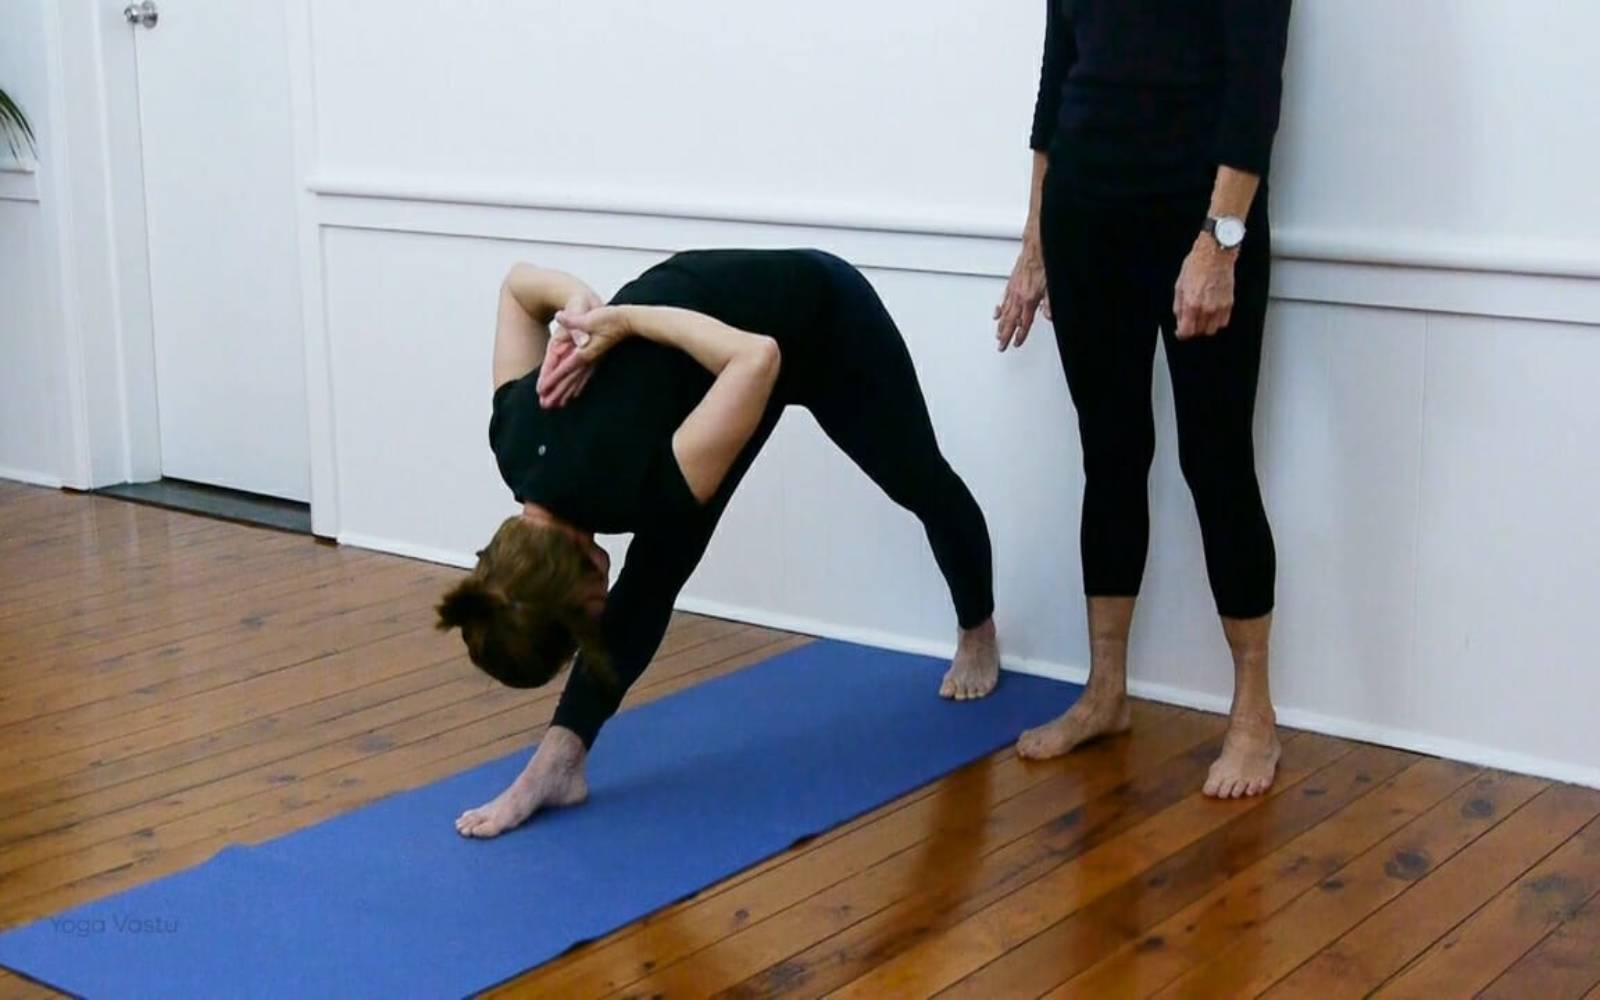 Parshvottanasana (Intense Side Stretch Pose) - Yoga Asana